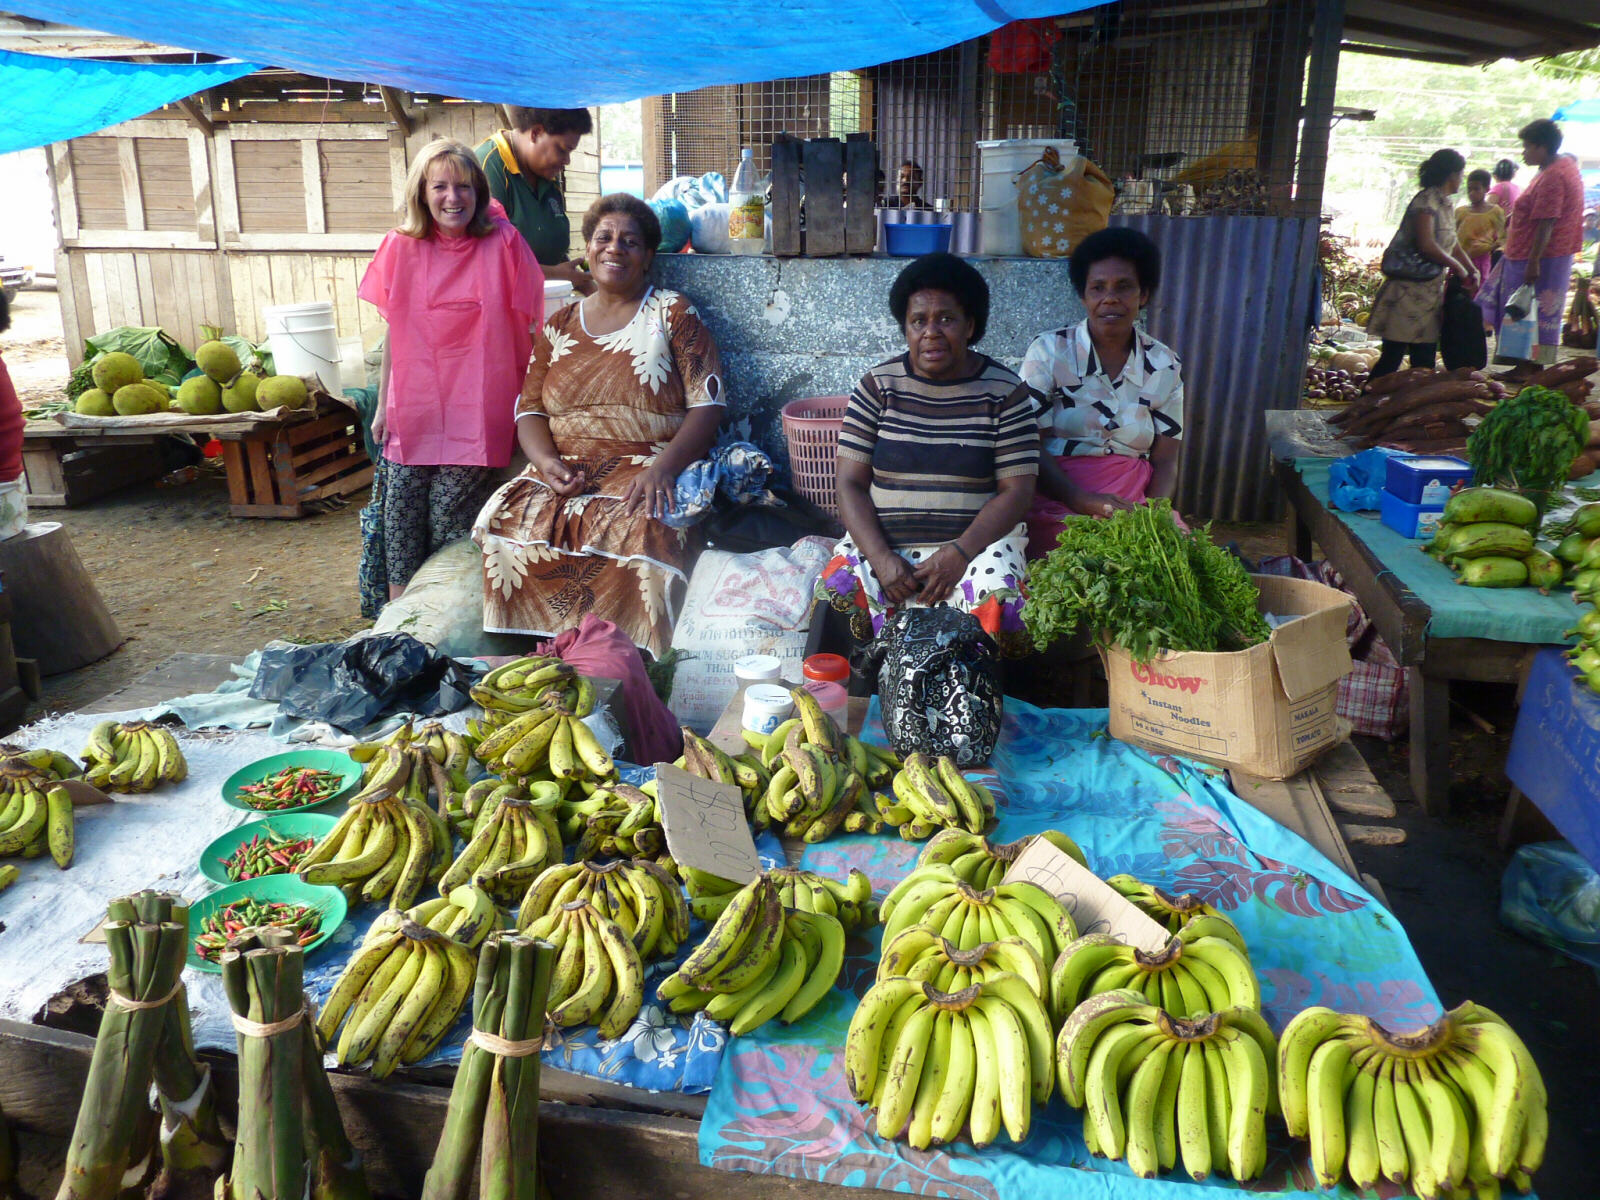 The market in Rakiraki, Fiji